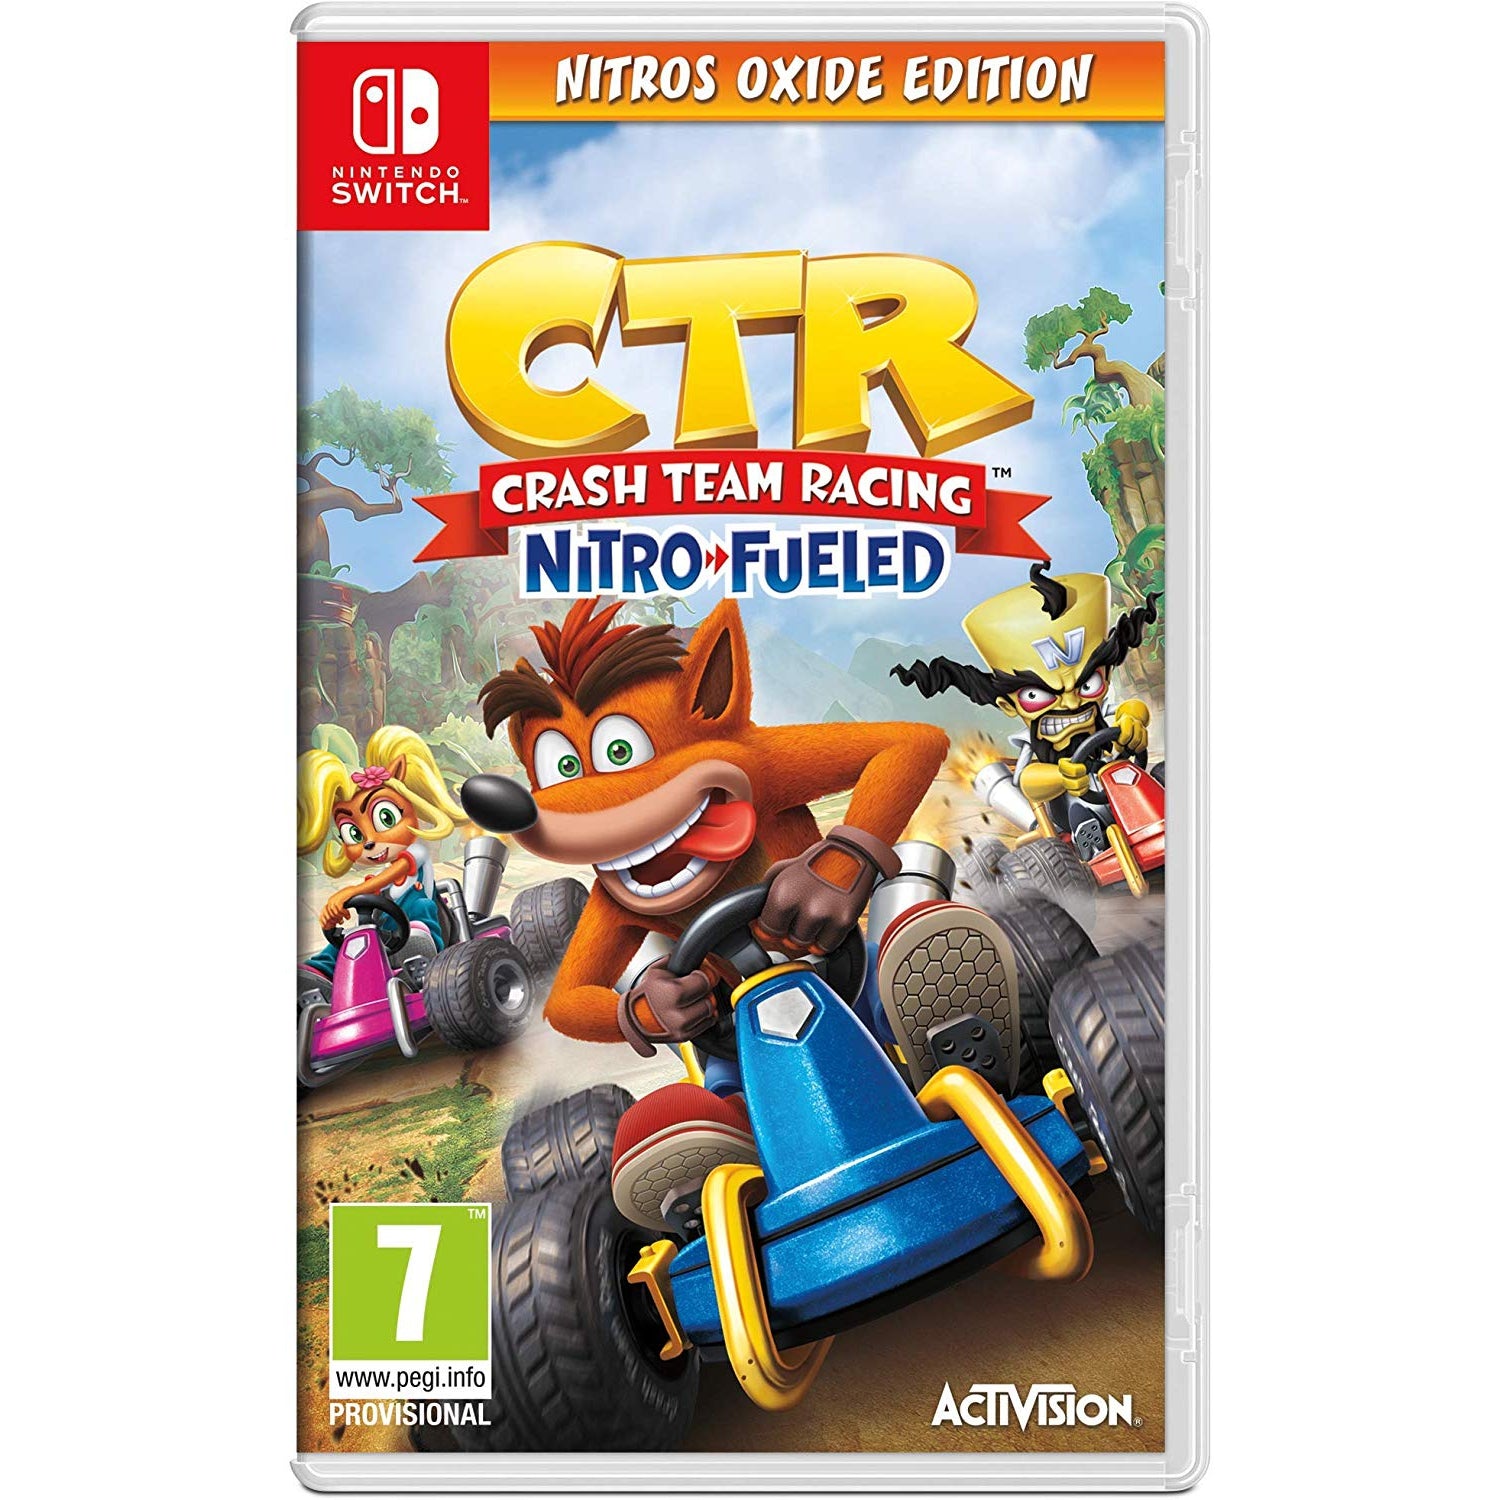 Crash Team Racing Nitro-Fueled - Nitros Oxide Edition (Nintendo Switch)